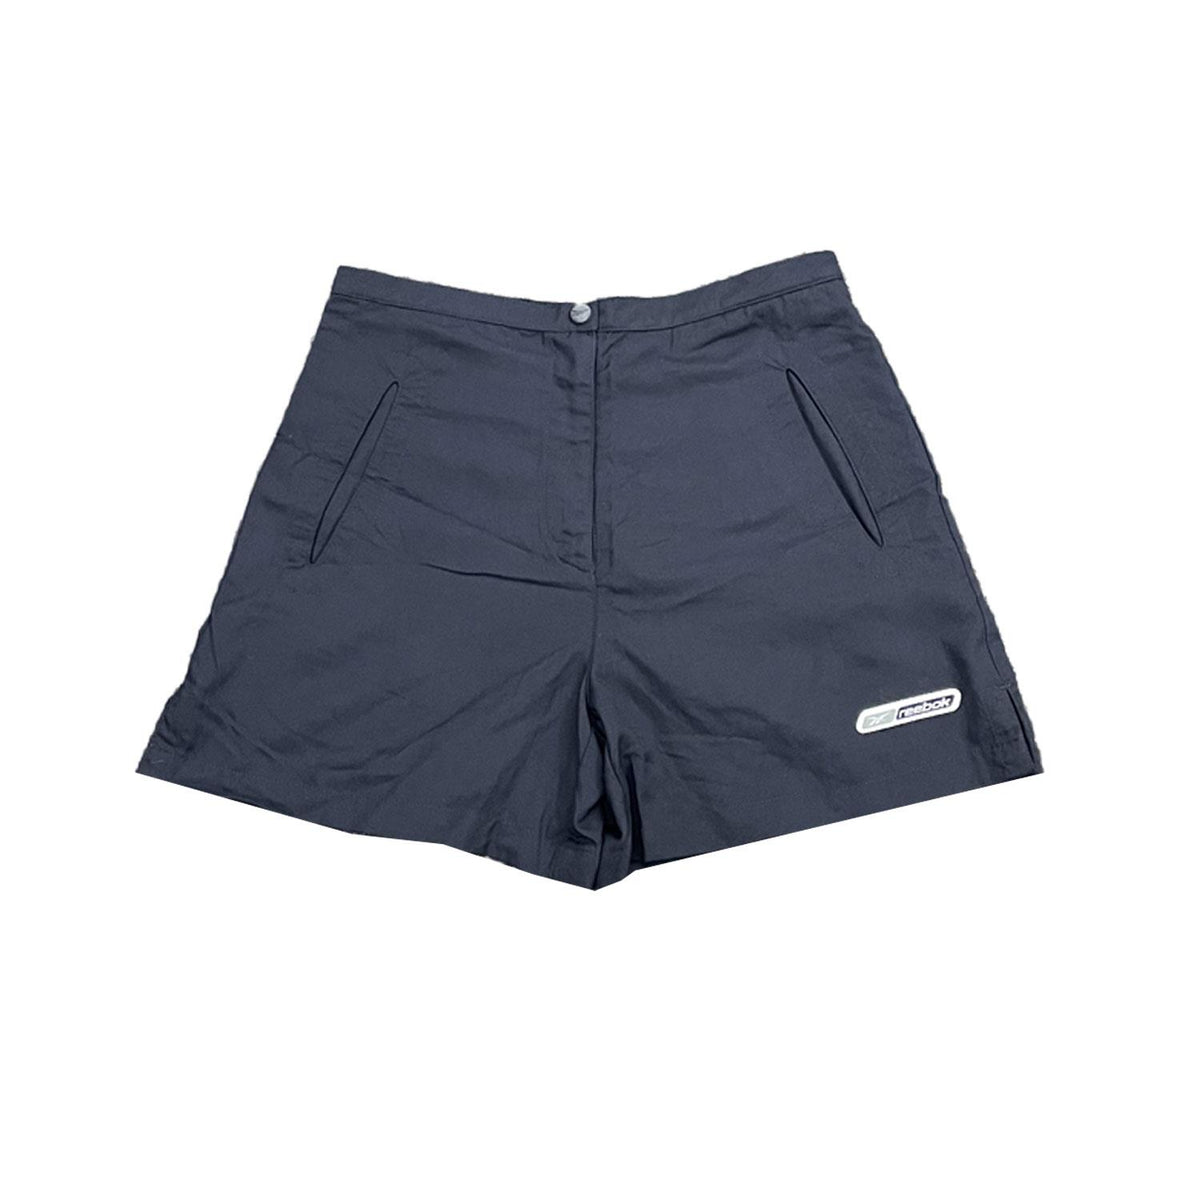 Reebok Womens Freestyle Casual Shorts - Navy - UK Size 12